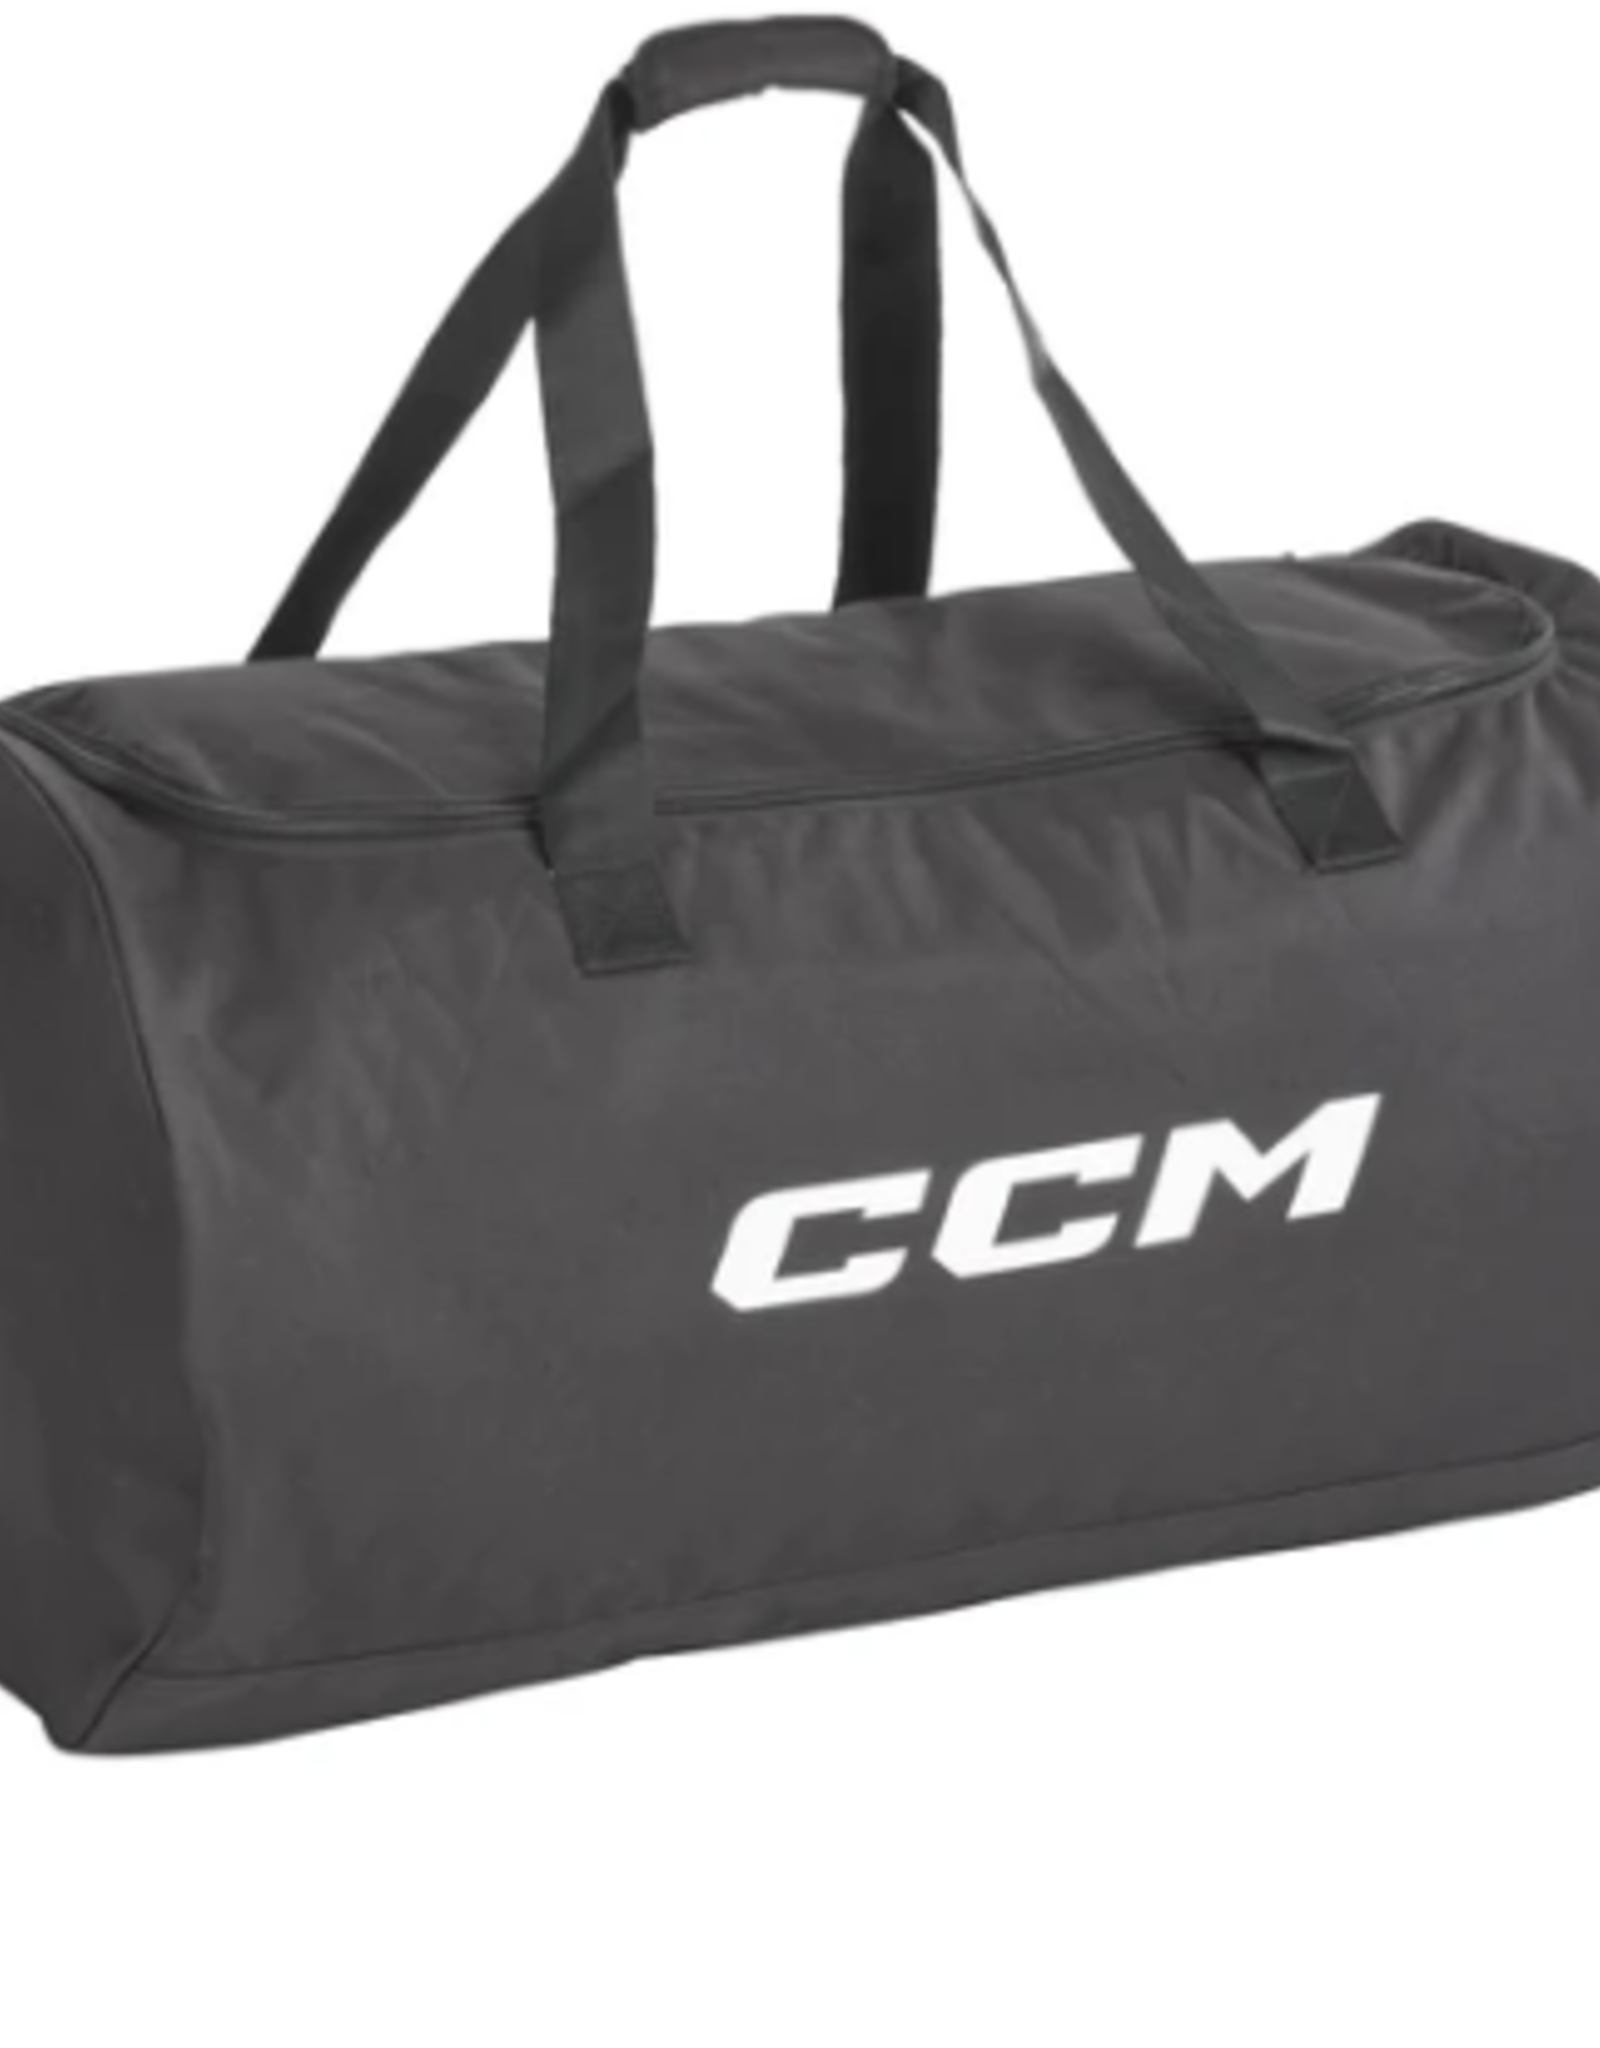 CCM Hockey CCM 410 PLAYER BASIC CARRY BAG 32''